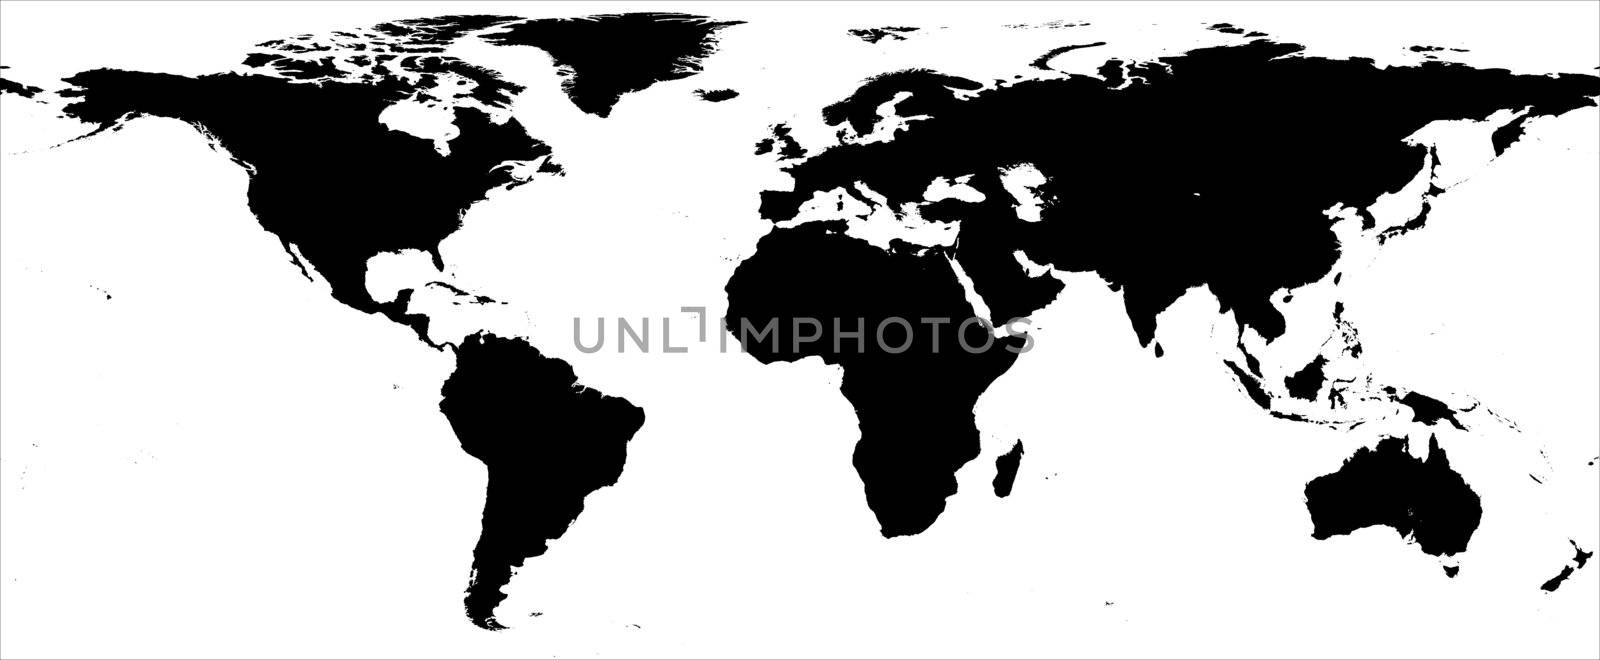 World map - black and white border